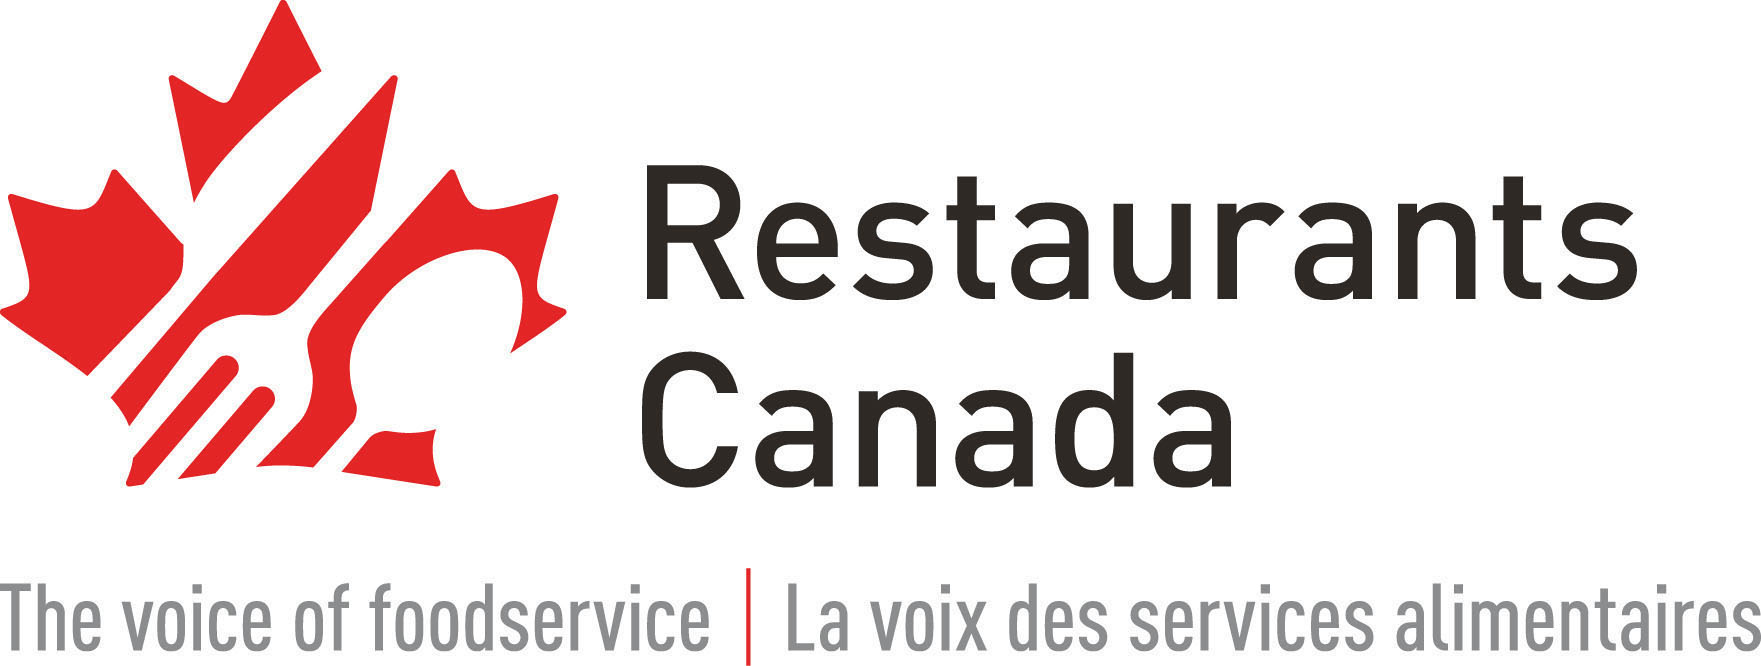 Ontario’s restaurant